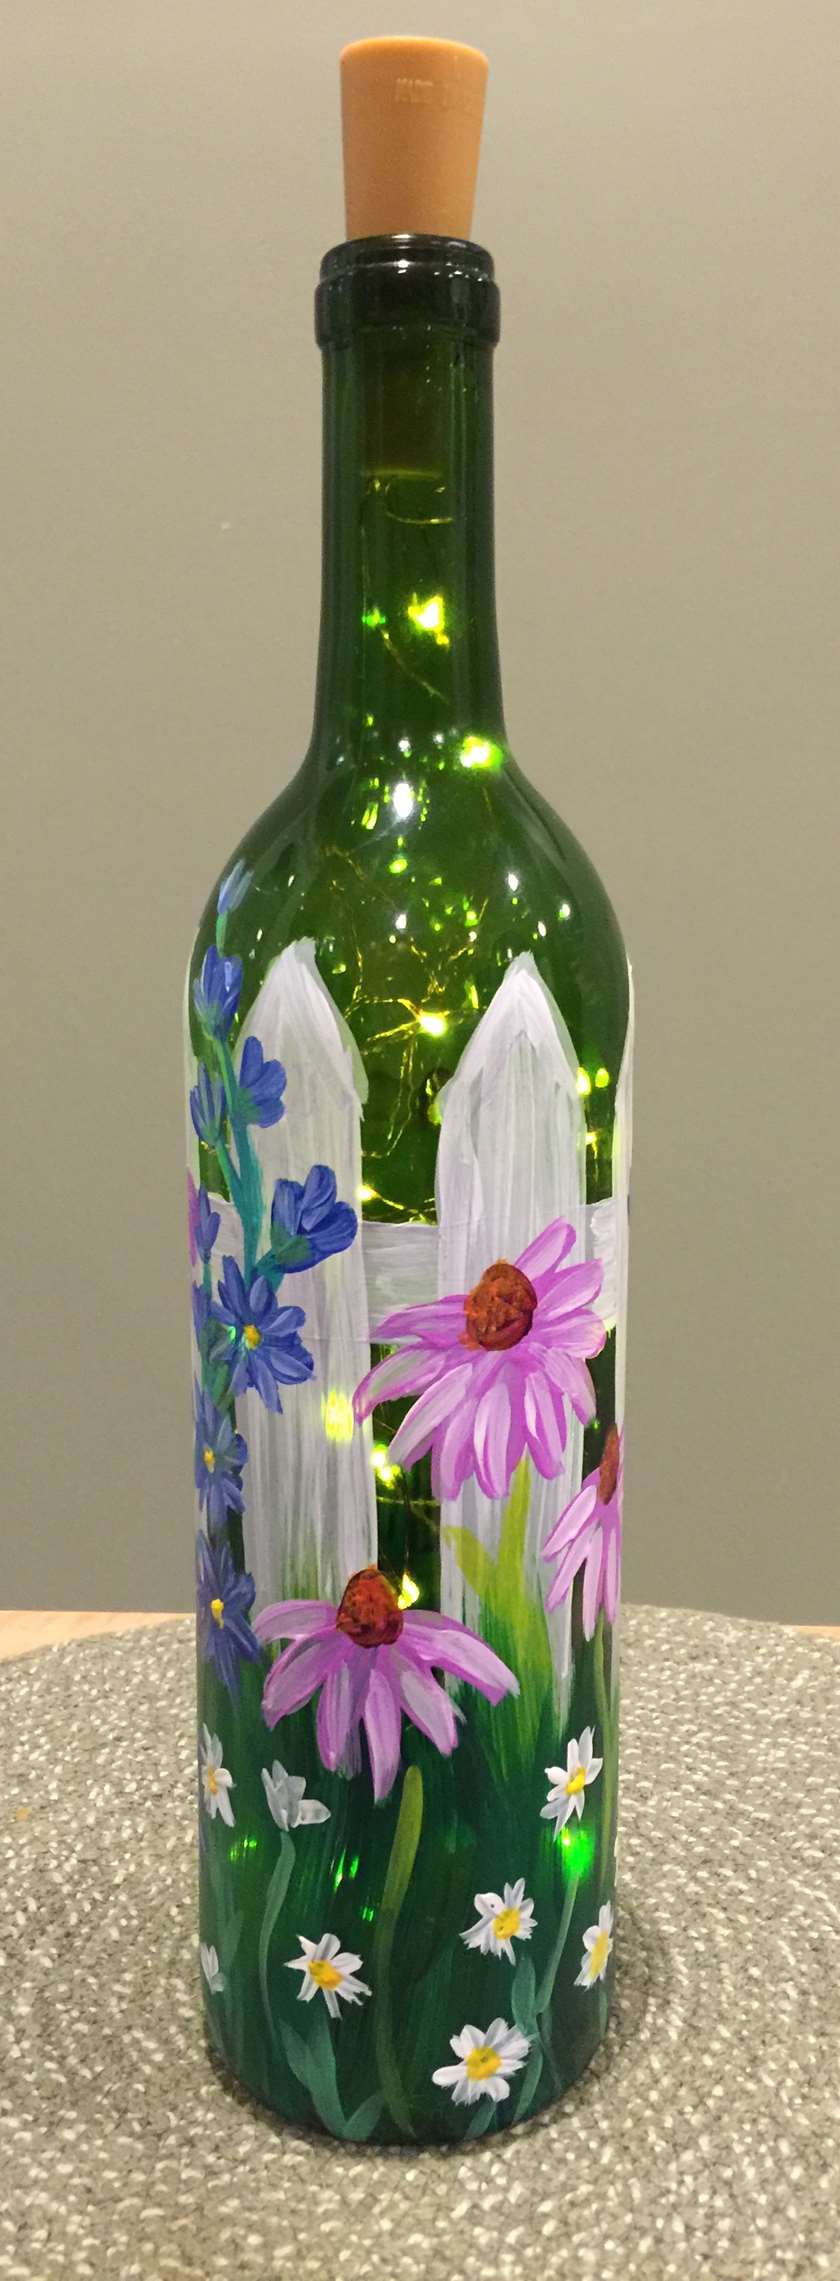 Wine & Charcuterie Tasting Class! ❤🎨🥂 Illuminated Wine Bottle Painting, Wine Flight & Charcuterie Included